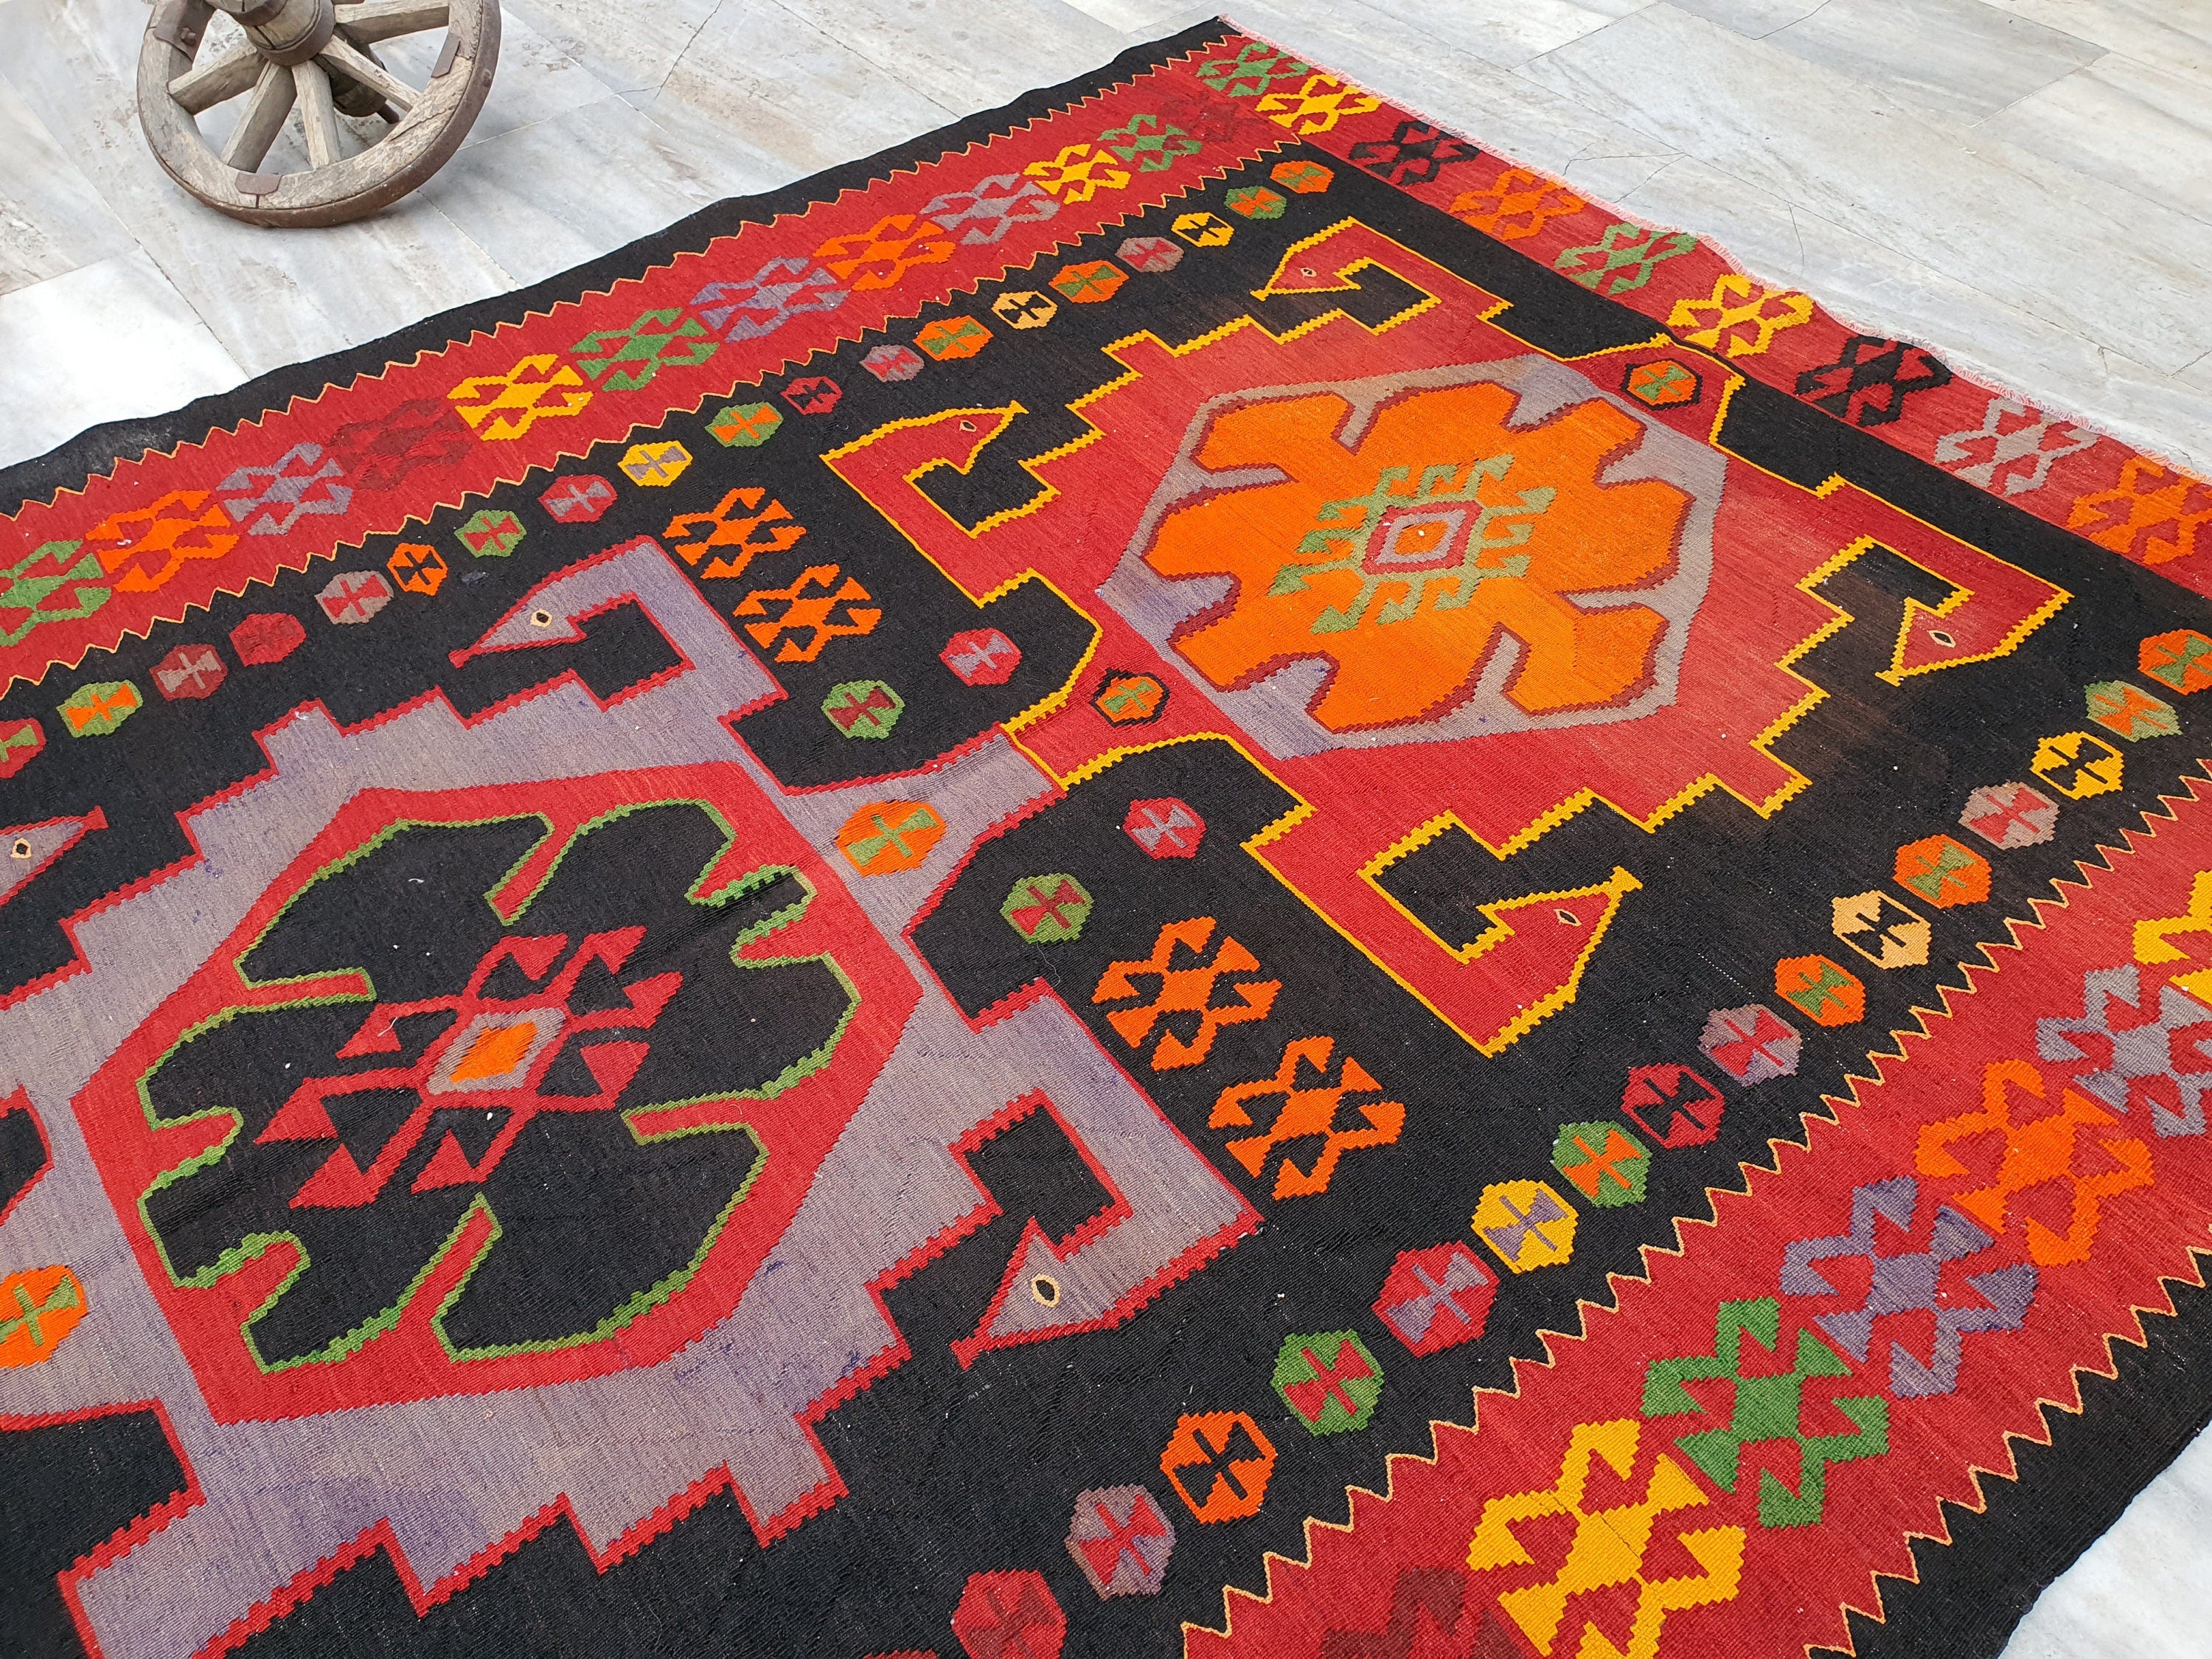 Vintage Decor Persian Area Kilim Living Room, Moroccan Style Handwoven Wool Rug, Bohemian Decor Rustic Rug, Colorful Turkish Rug 9.9*6.3 ft